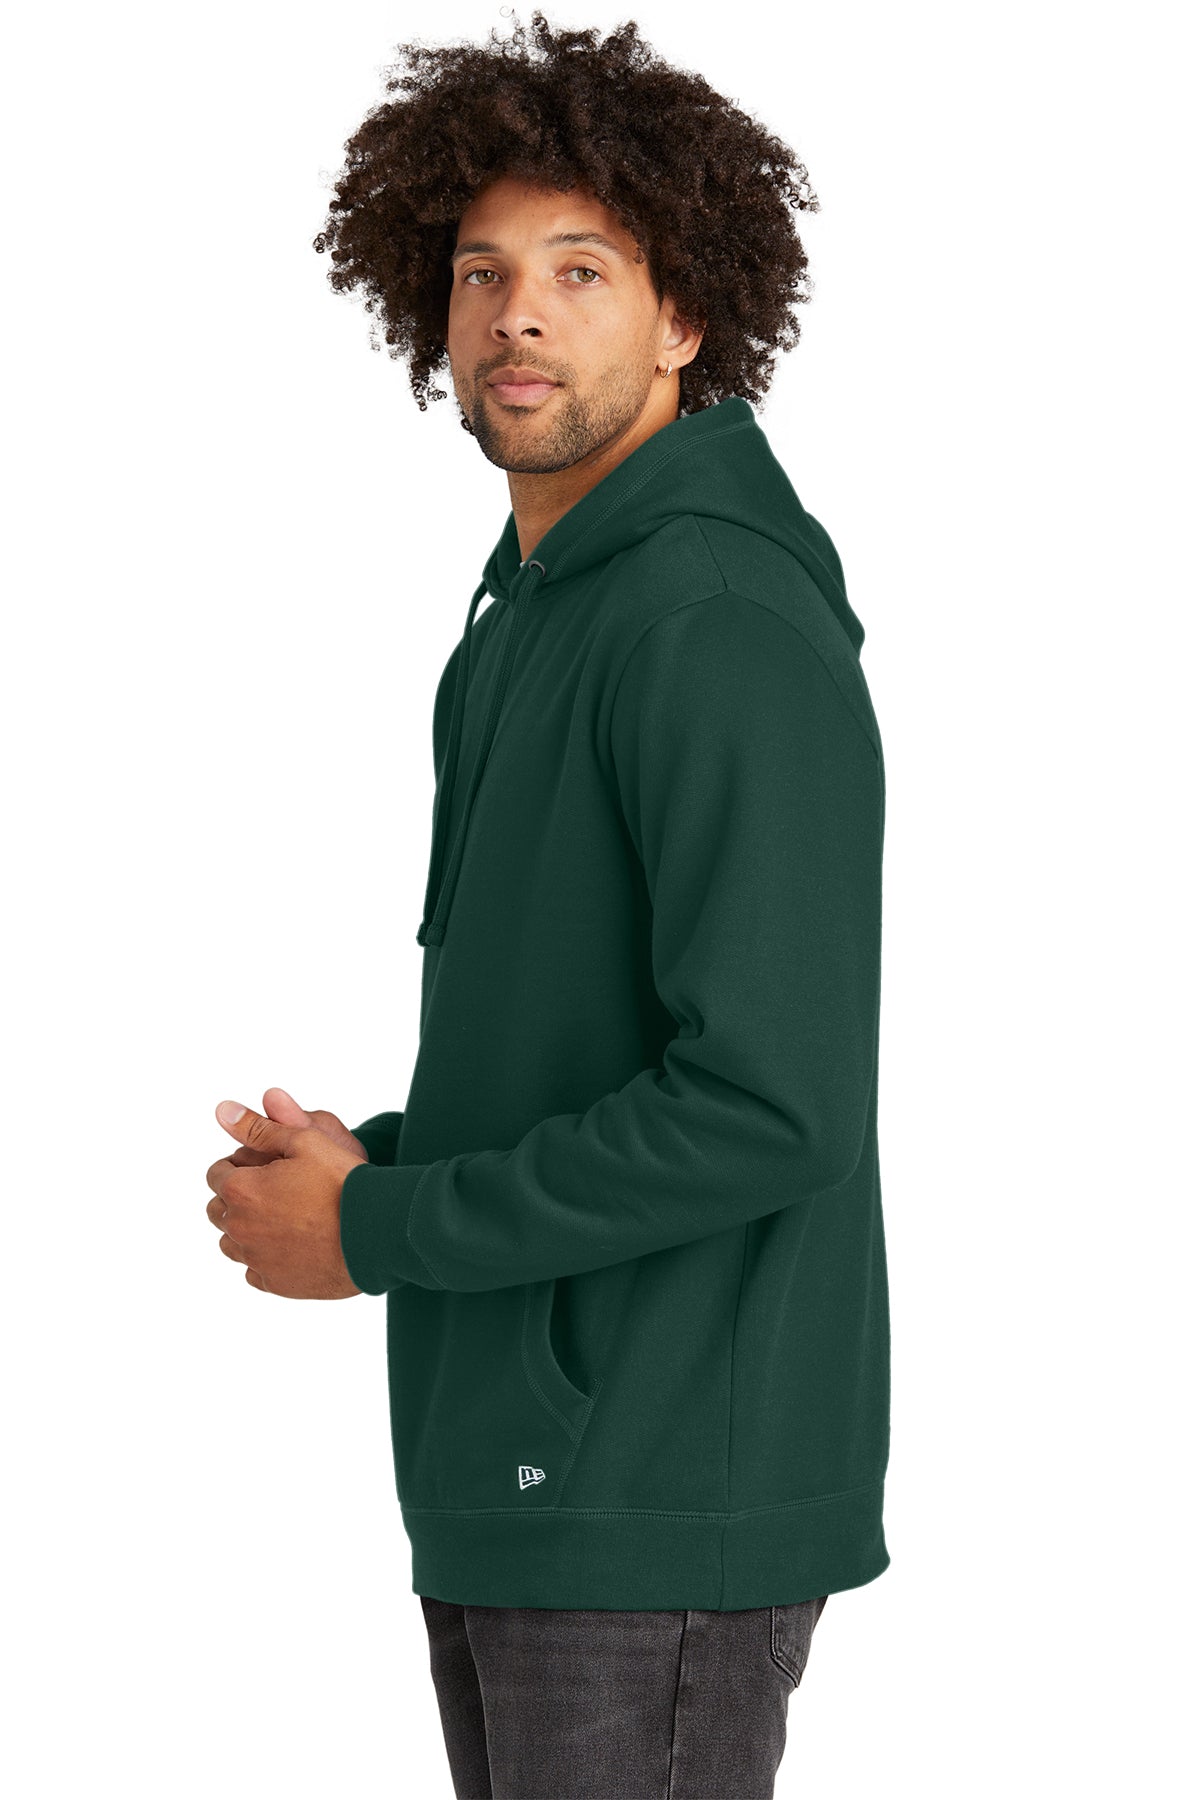 New Era Comeback Fleece Customized Hoodies, Dark Green